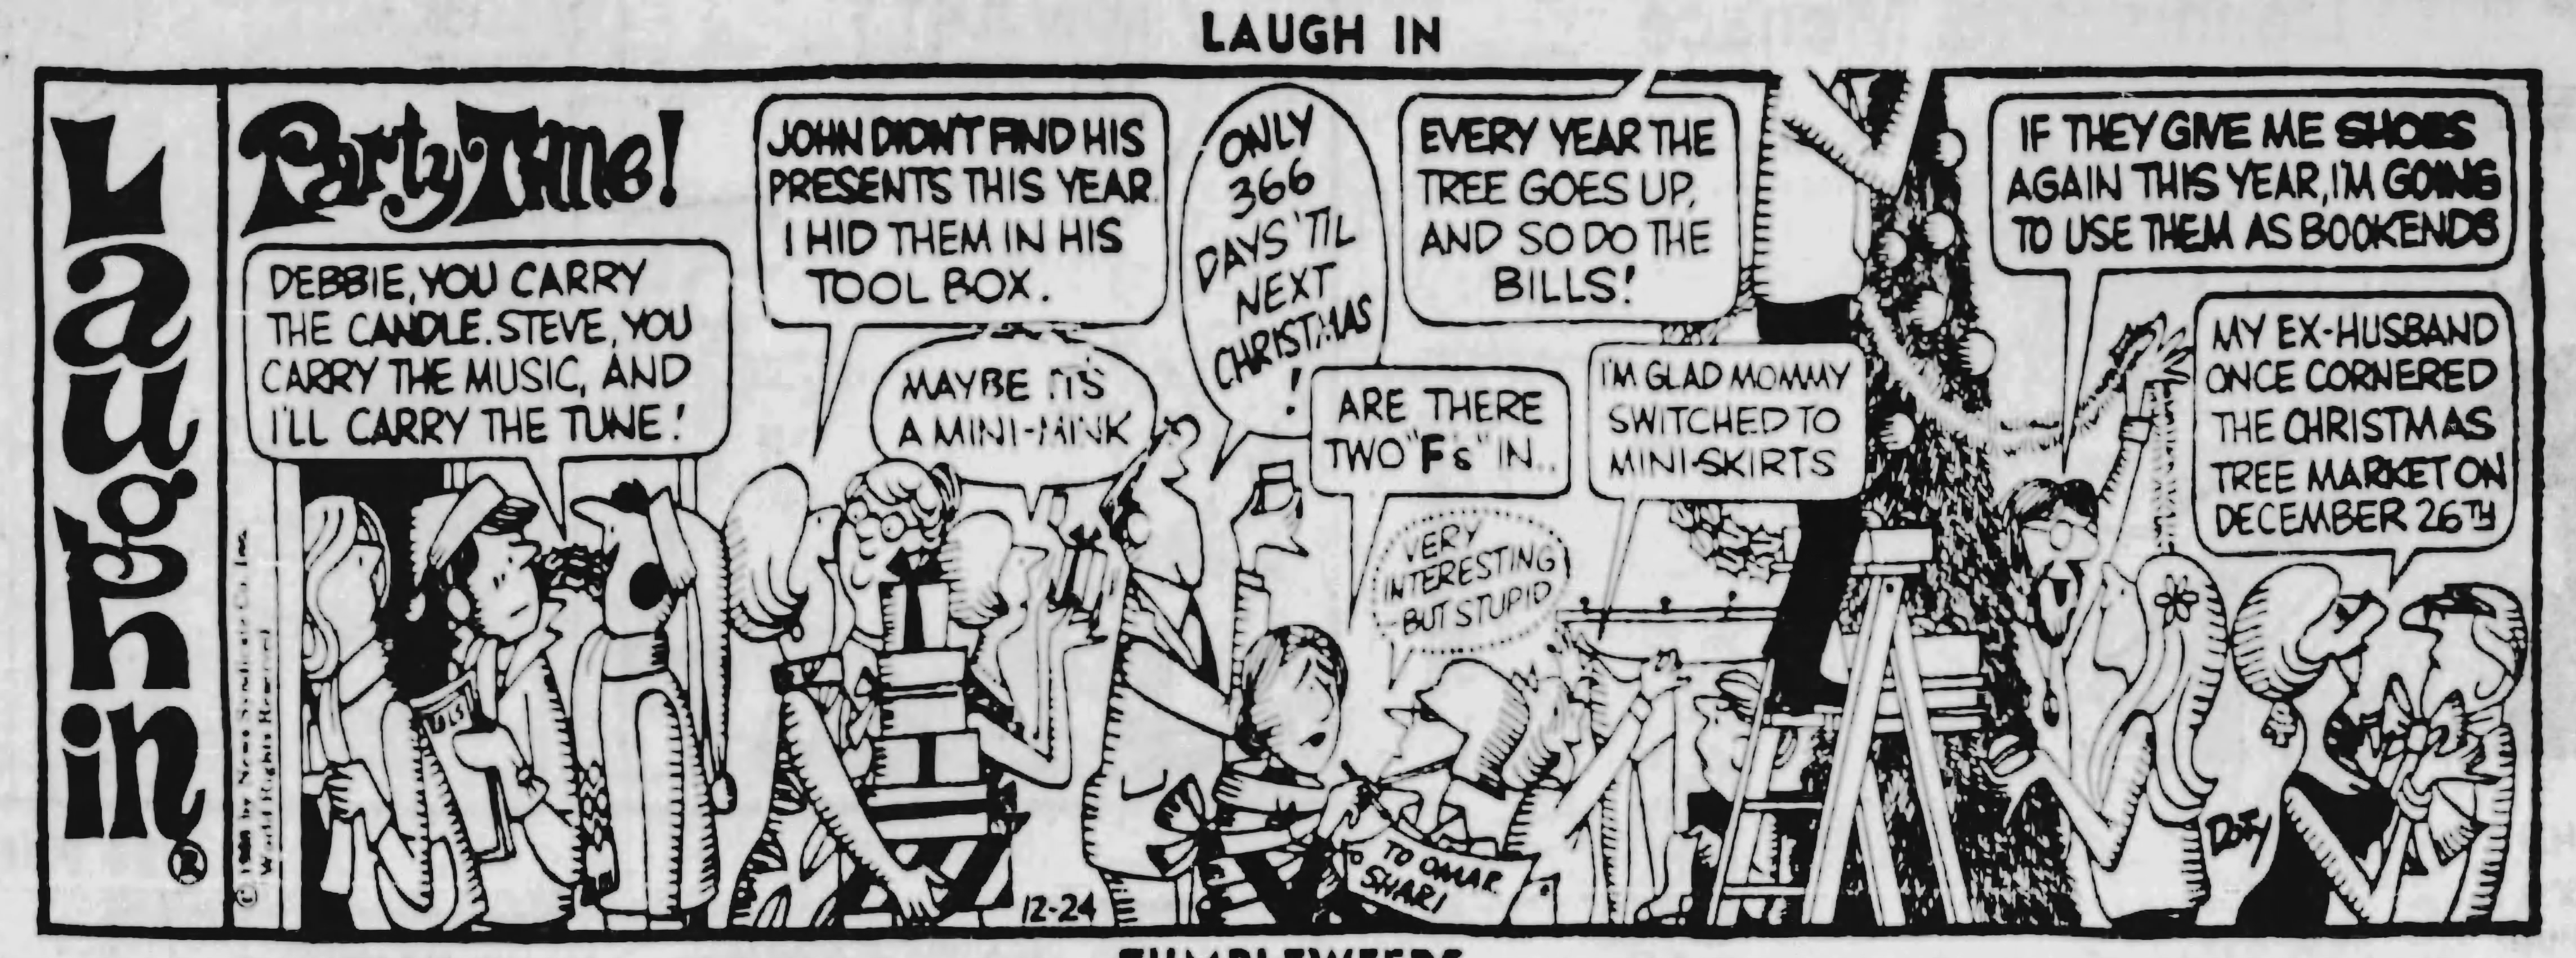 Laugh-in, December 24, 1968